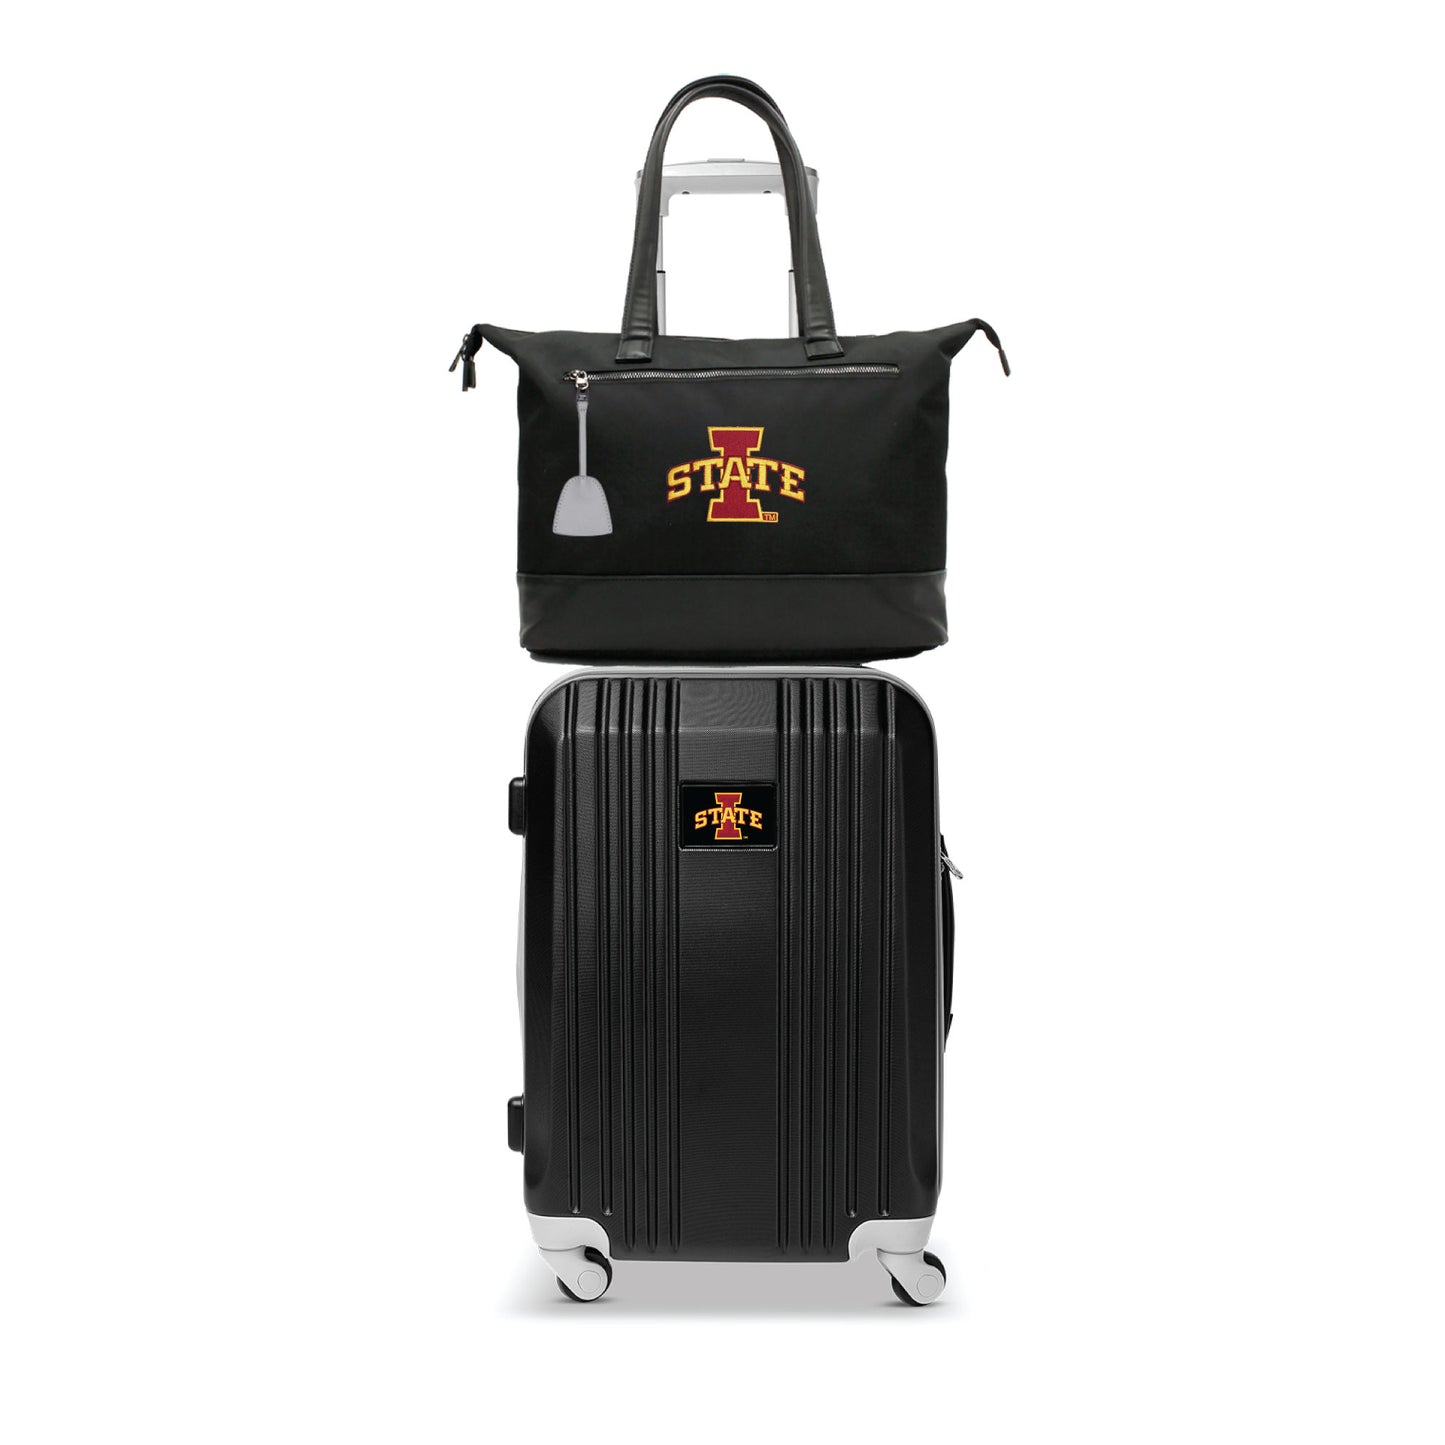 Iowa State Cyclones Premium Laptop Tote Bag and Luggage Set